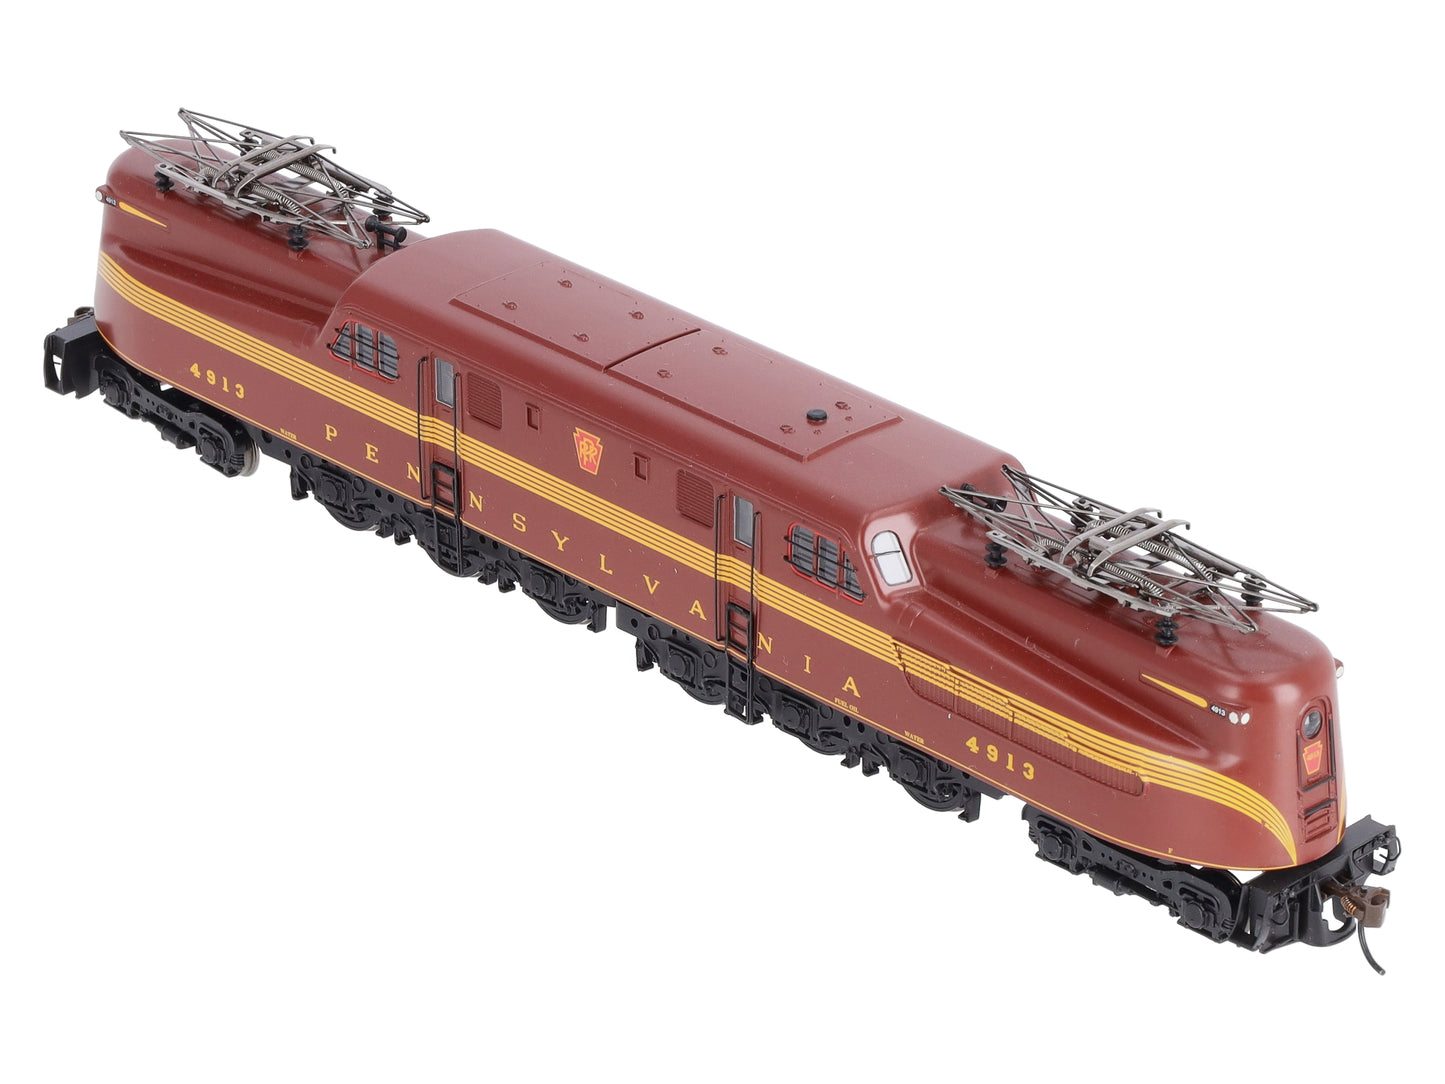 Bachmann 65302 HO Pennsylvania GG-1 Electric Locomotive #4913 w/DCC Sound